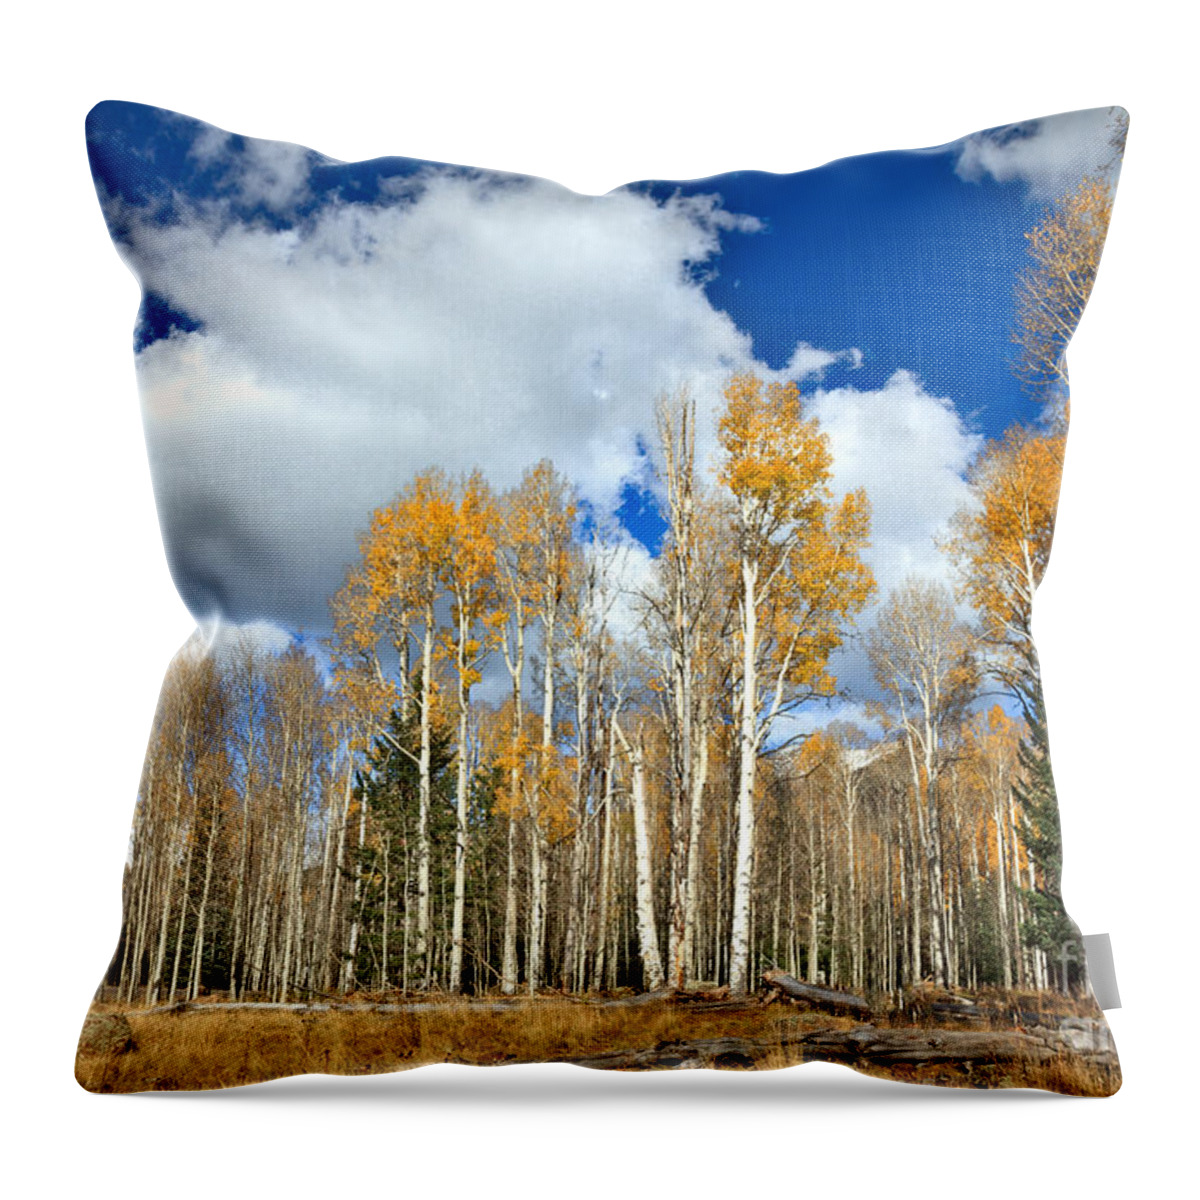 Autumn Throw Pillow featuring the photograph Beautiful Aspen Grove by Robert Bales